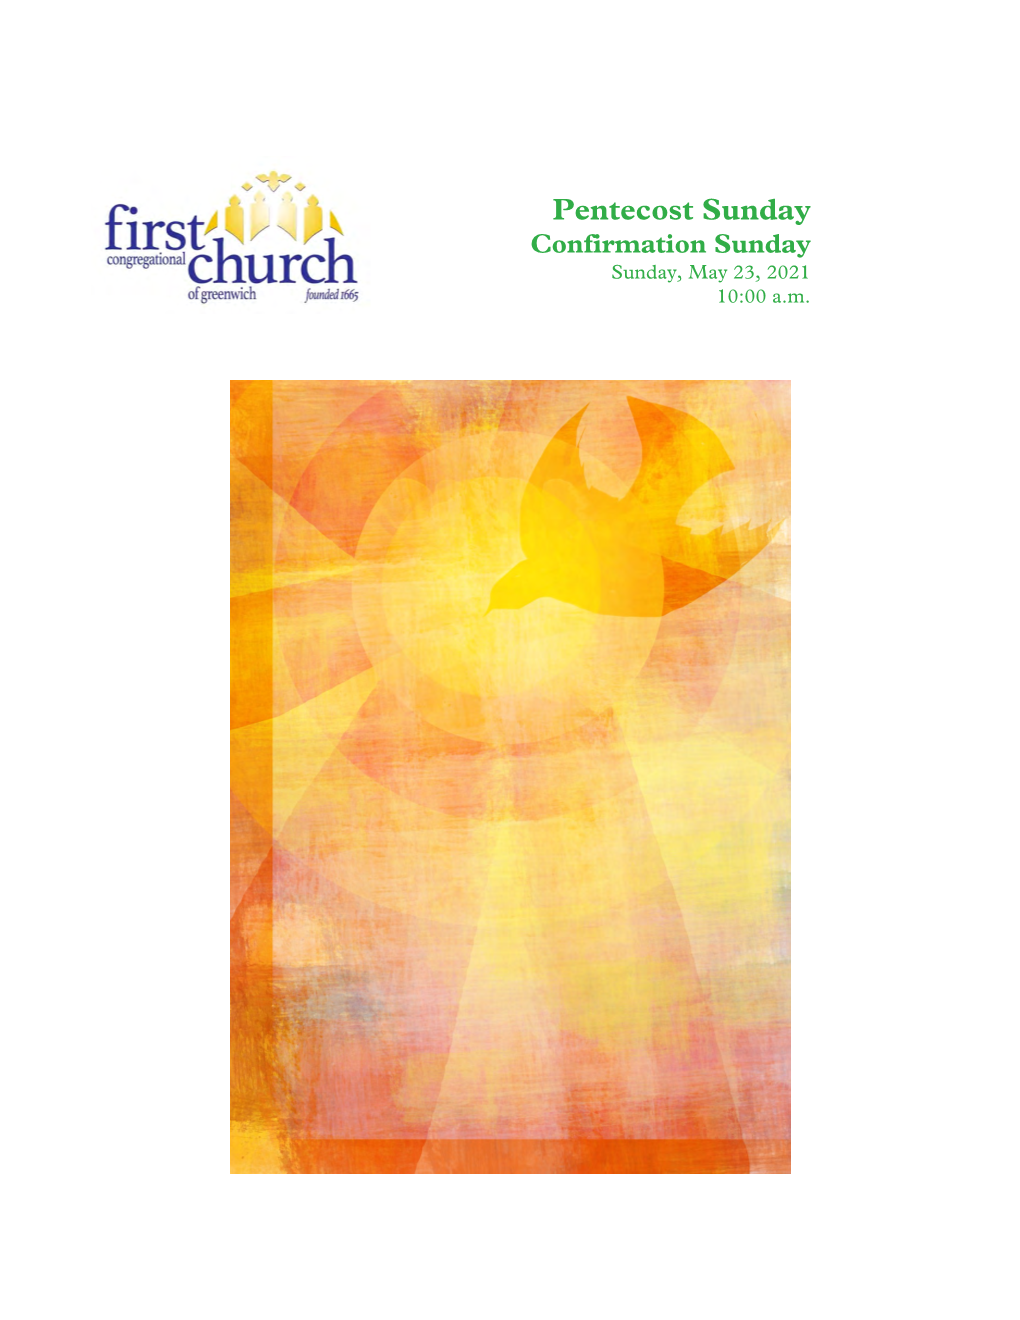 Pentecost Sunday Confirmation Sunday Sunday, May 23, 2021 10:00 A.M